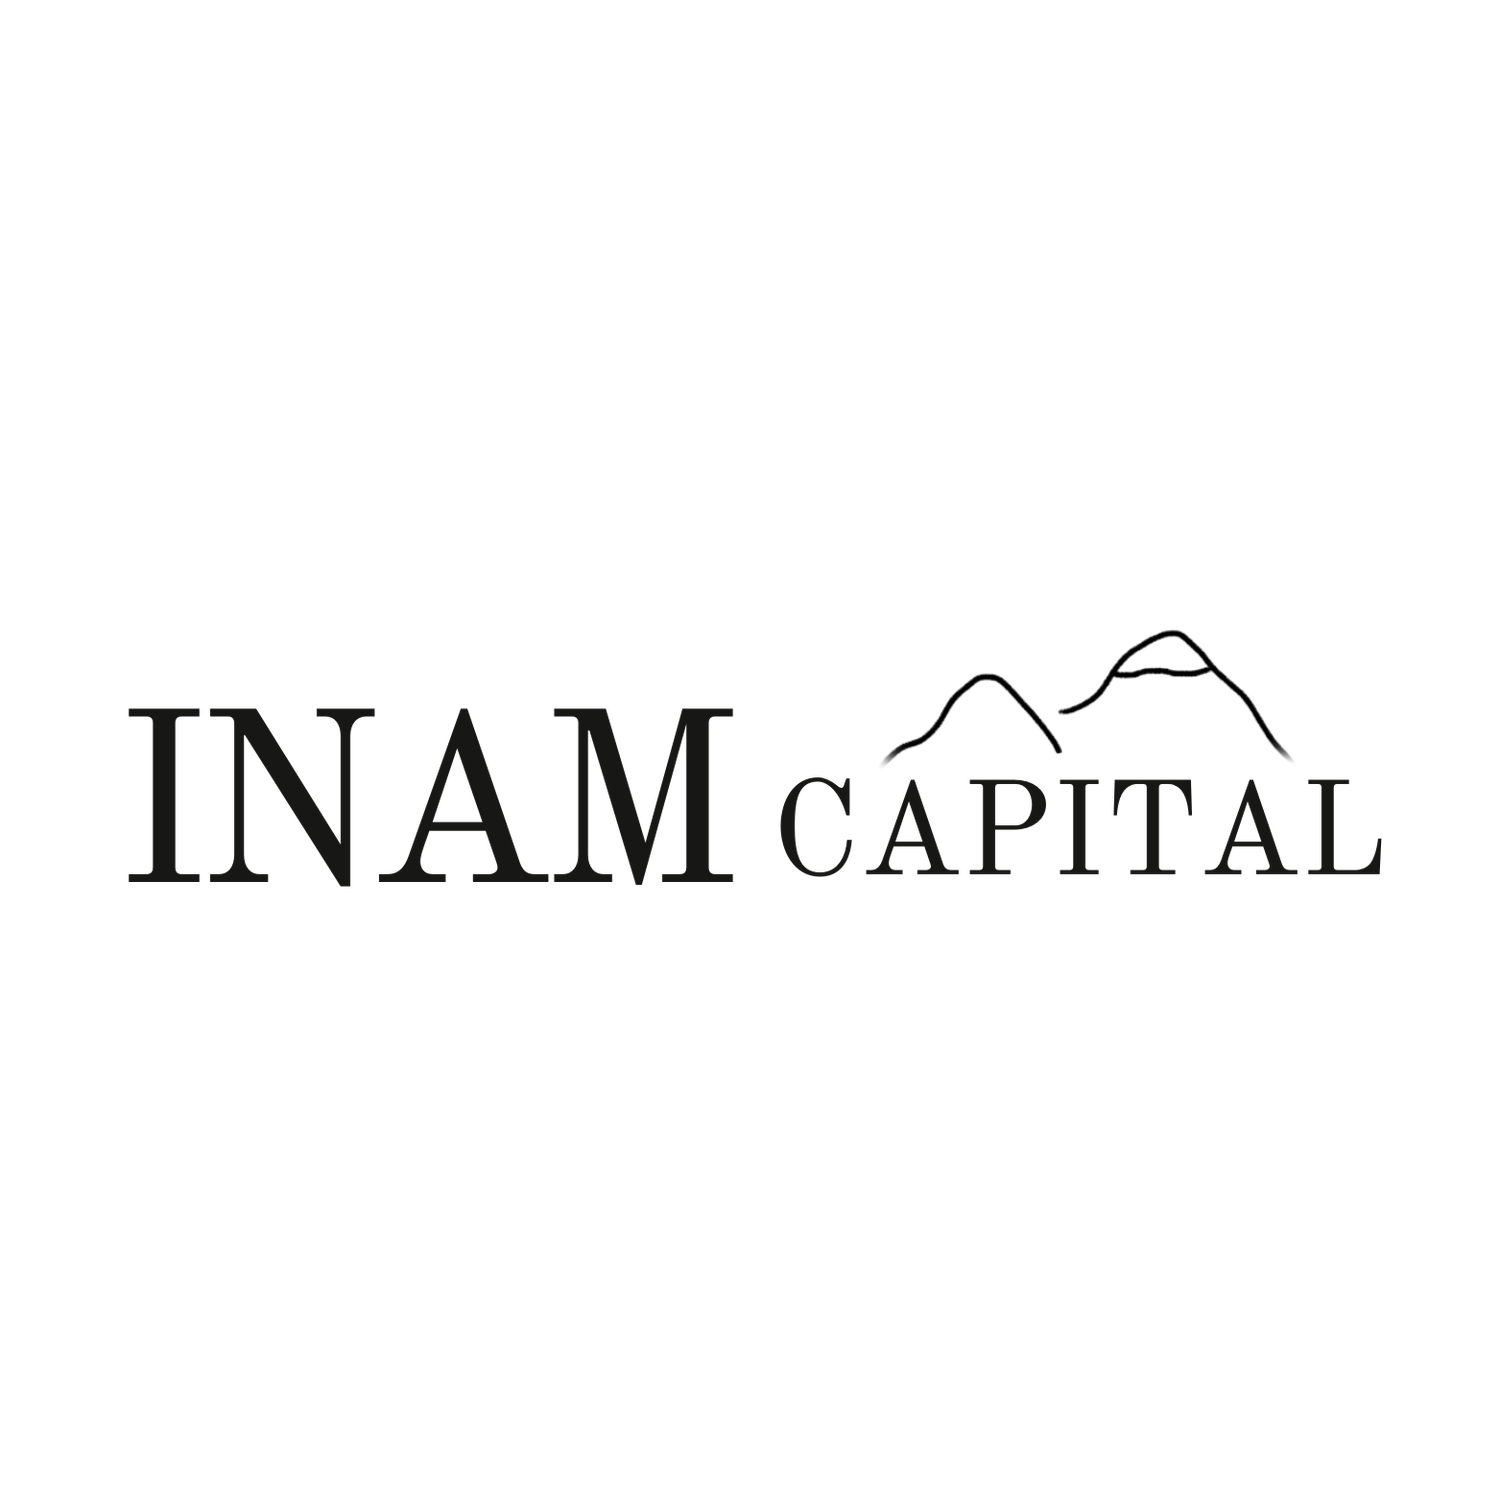 INAM Capital